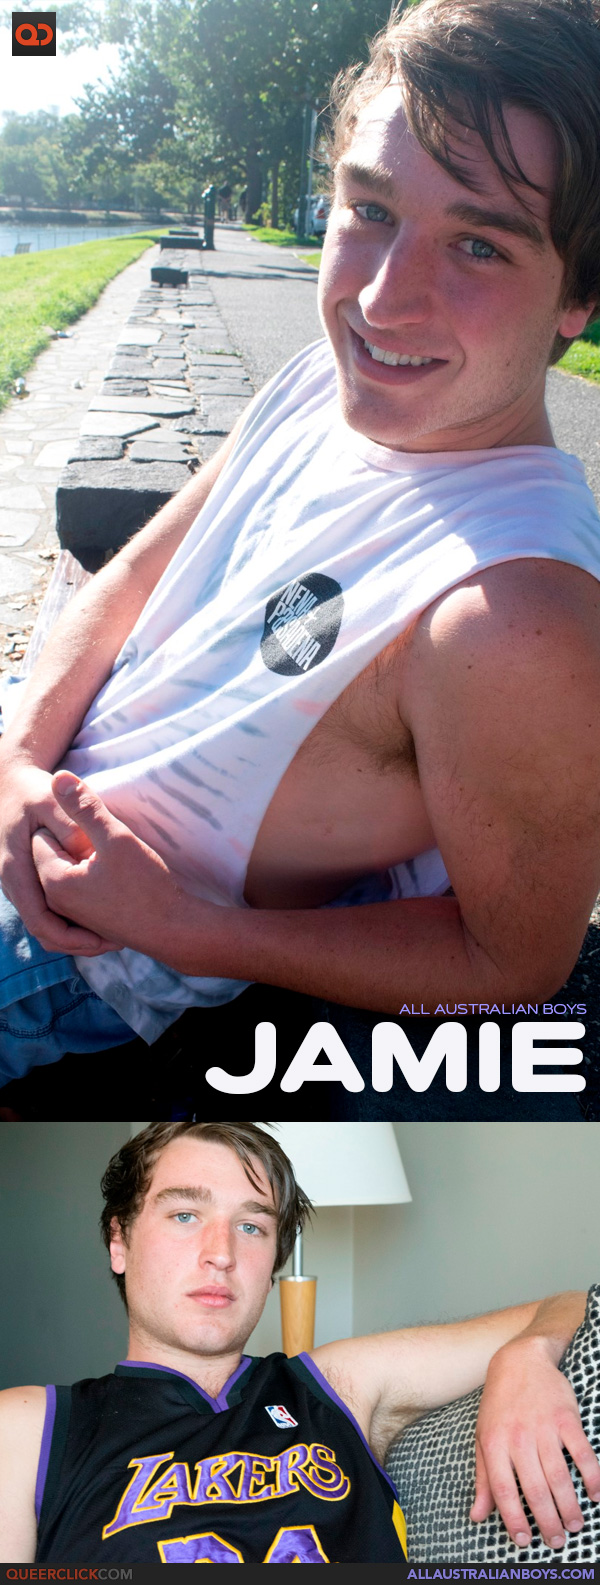 All Australian Boys: Jamie